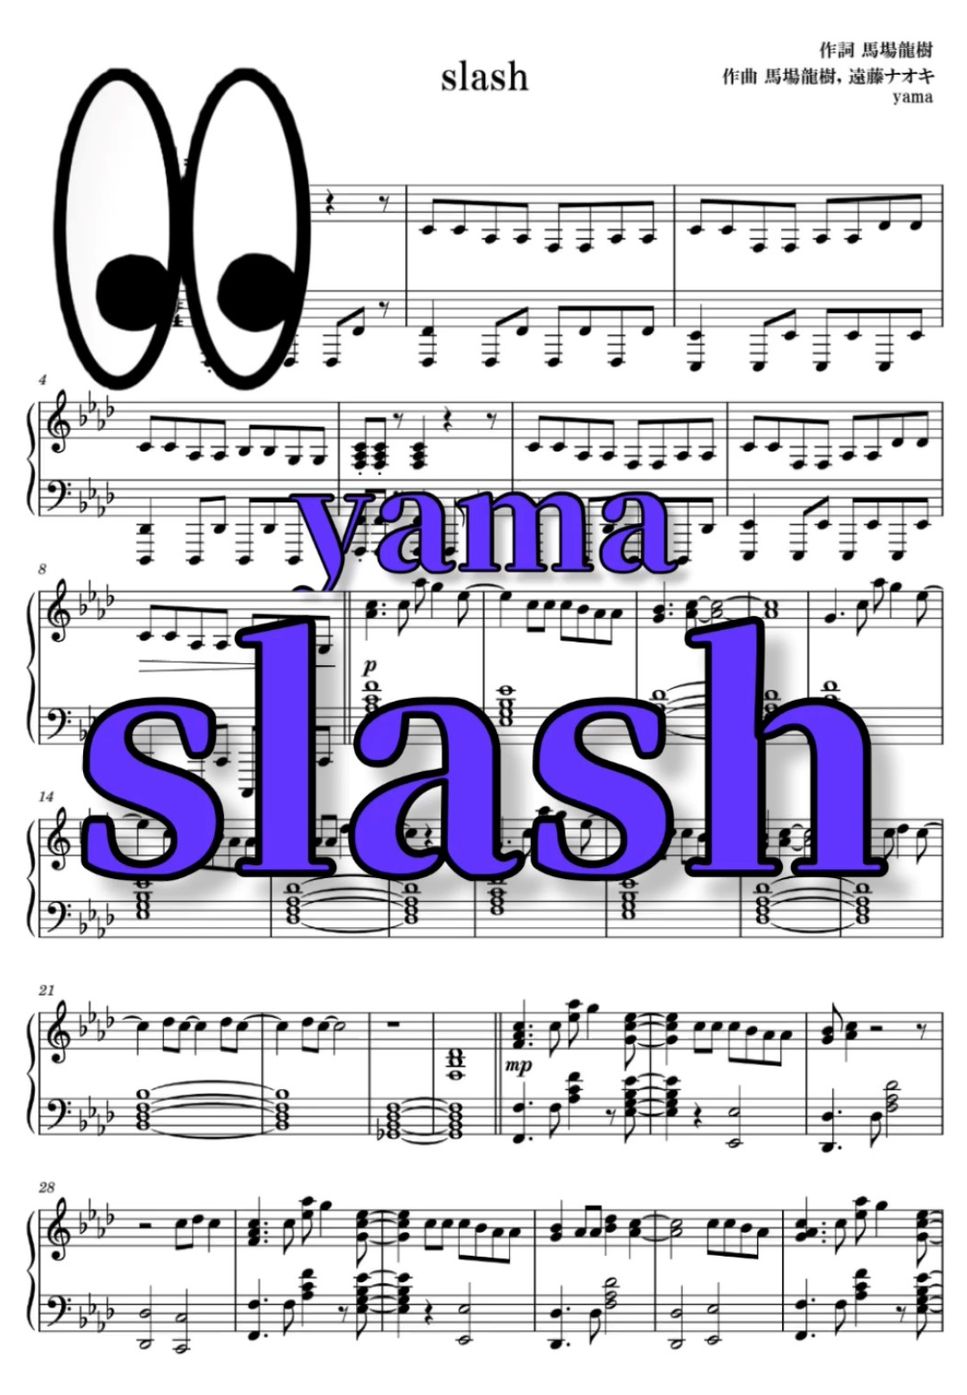 yama - 【VeryHard＋】slash/yama (piano/anime/gundam/ピアノ/yama/アニメ/アニソン/ガンダム/水星の魔女/スレッタ) by uRuMI